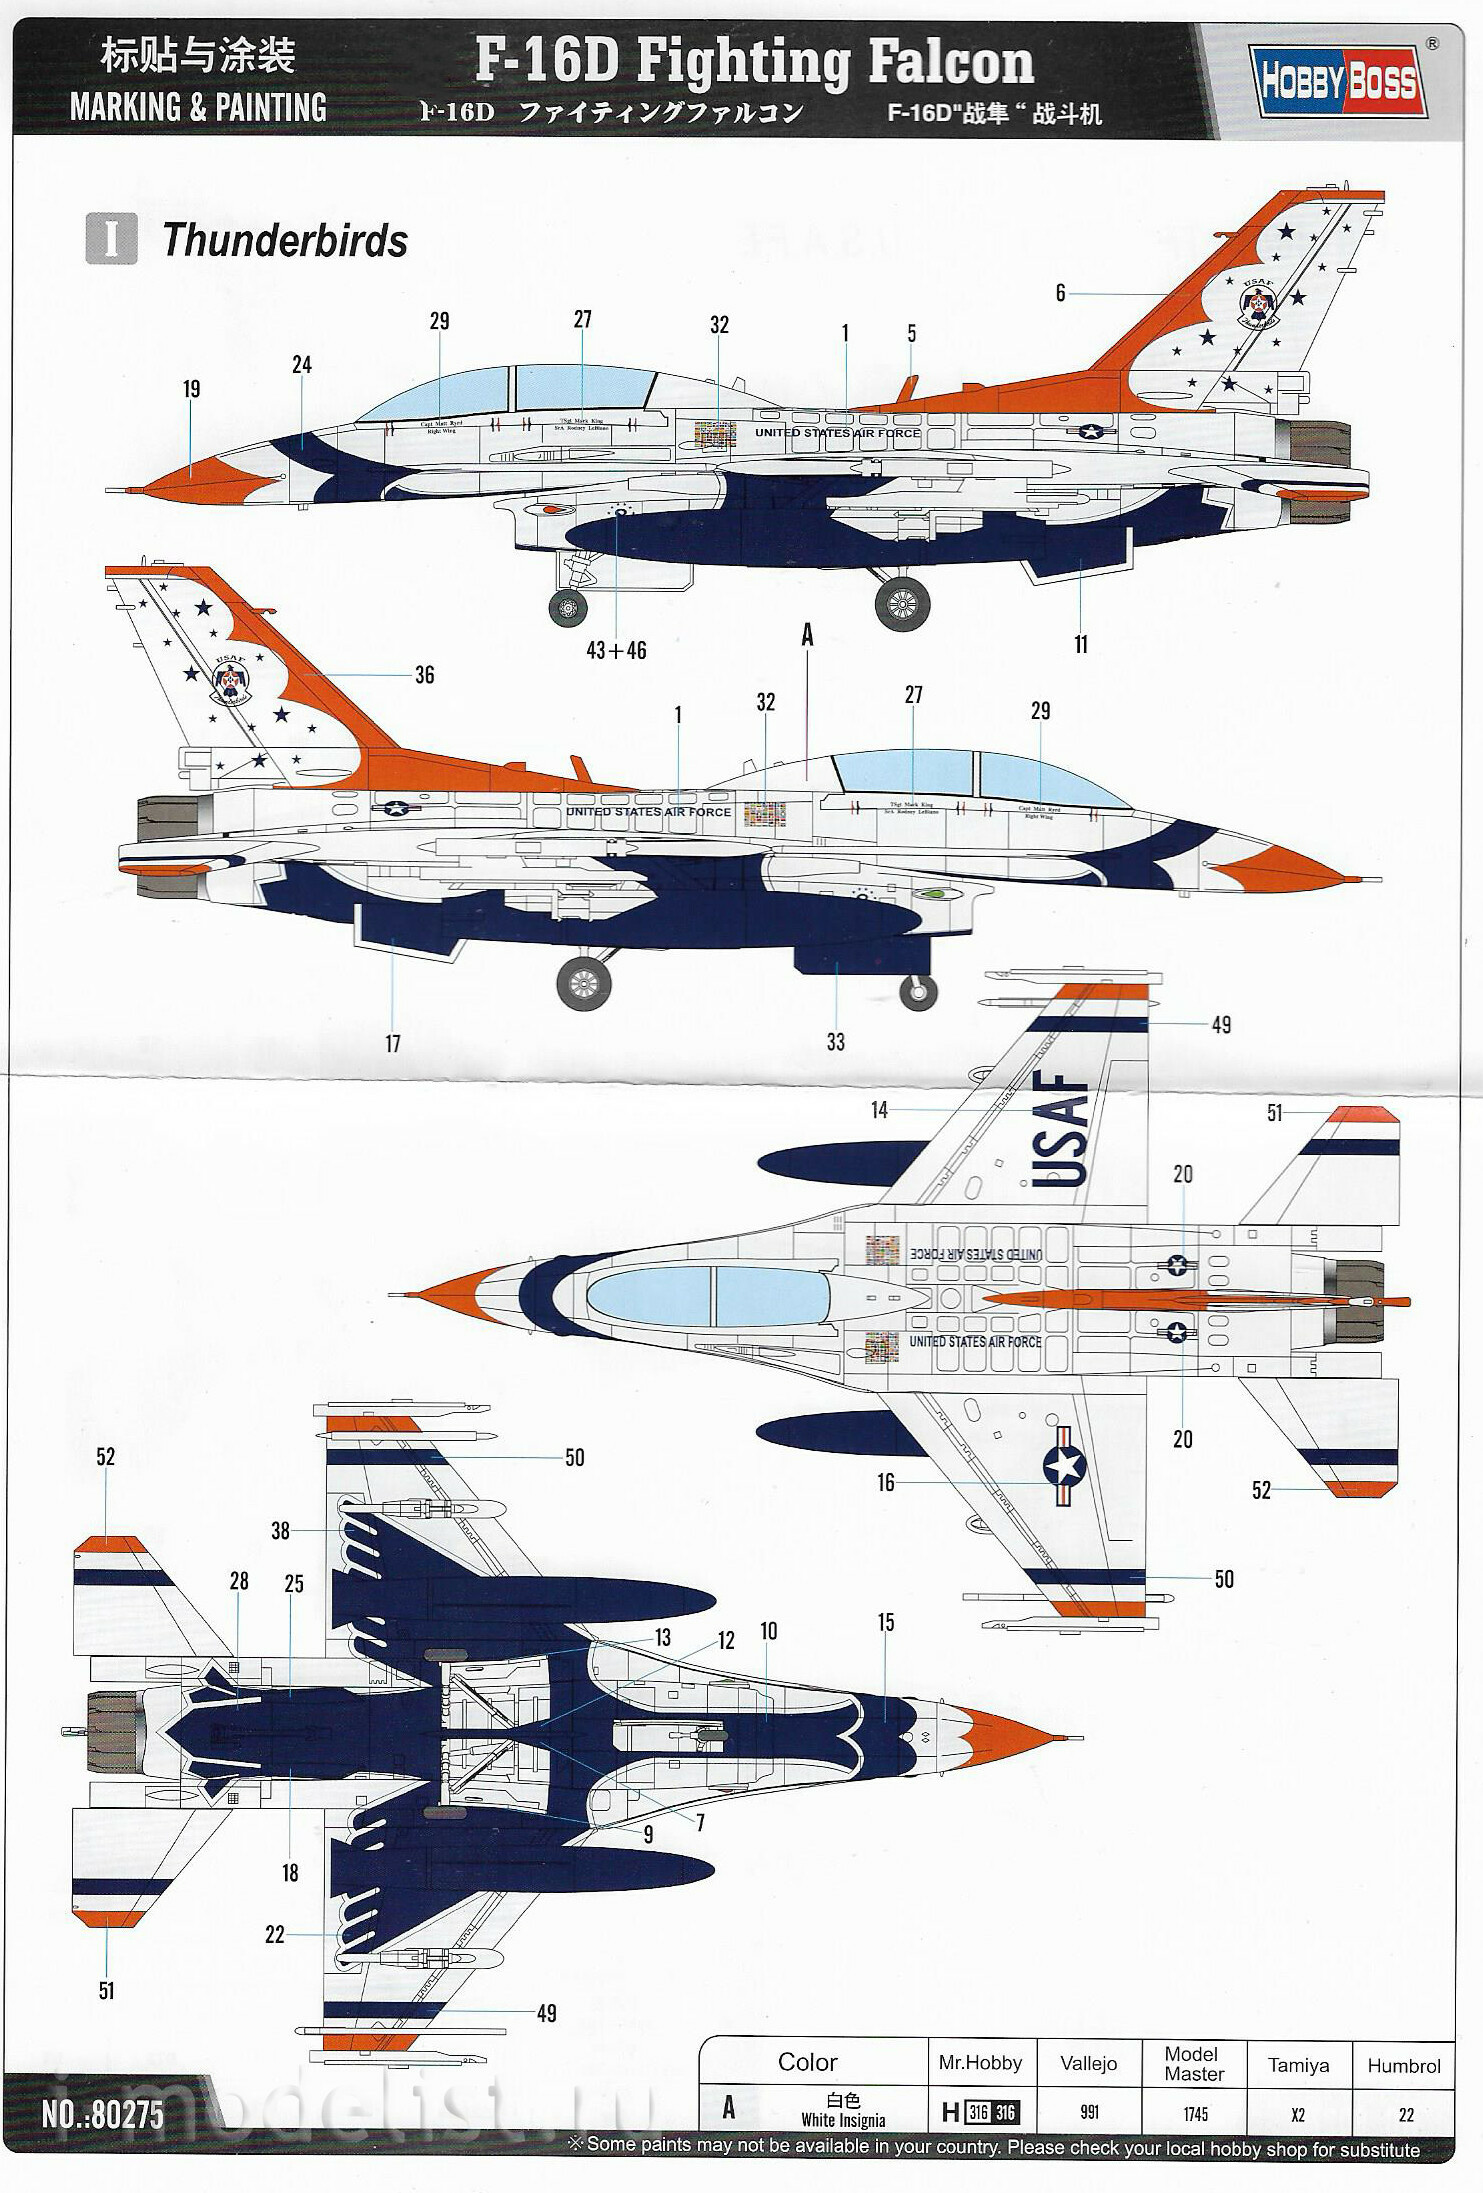 80275 HobbyBoss 1/72 Самолет F-16D Fighting Falcon